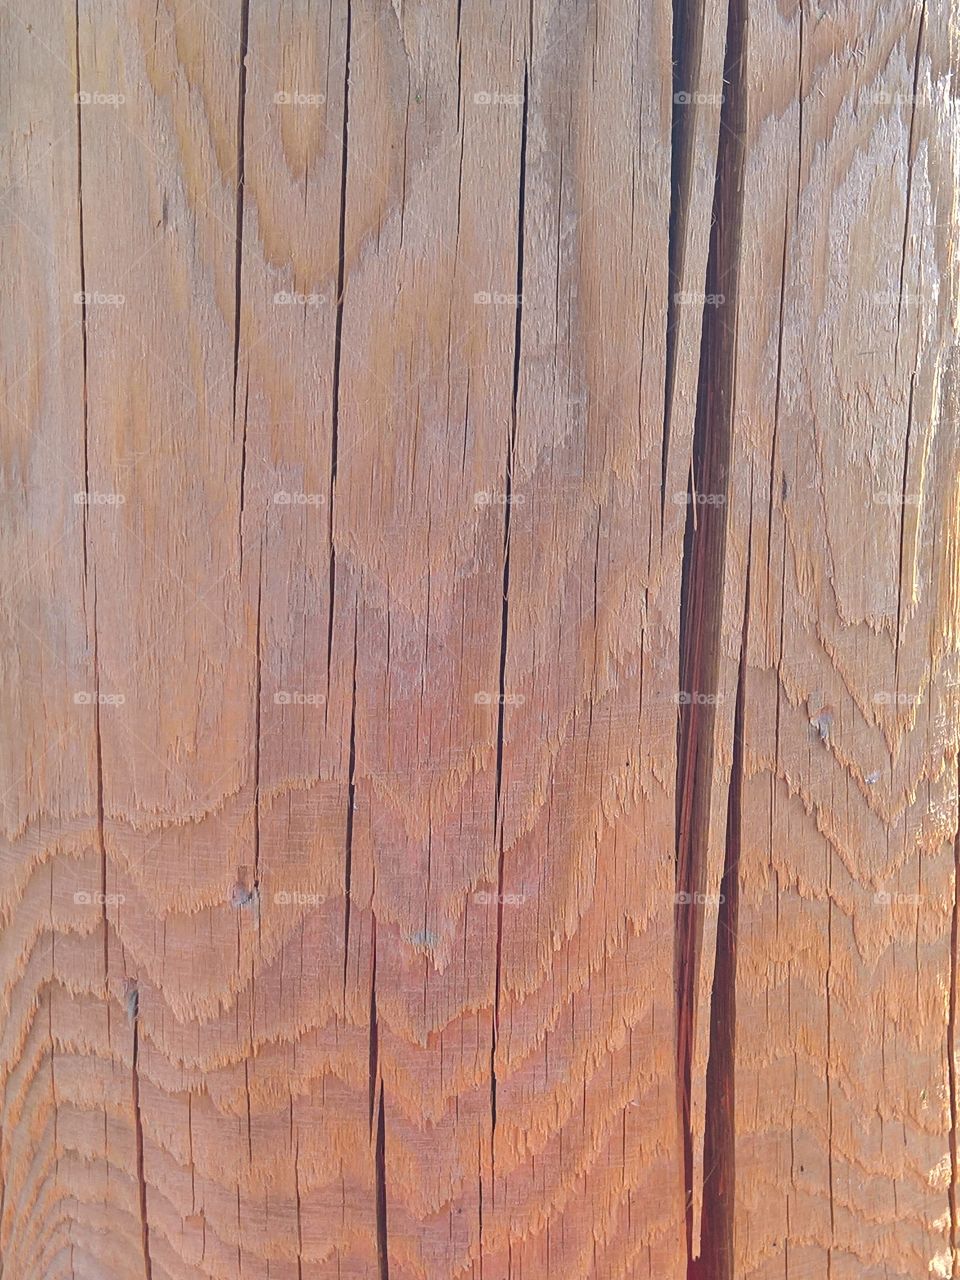 texture of a light wooden pole